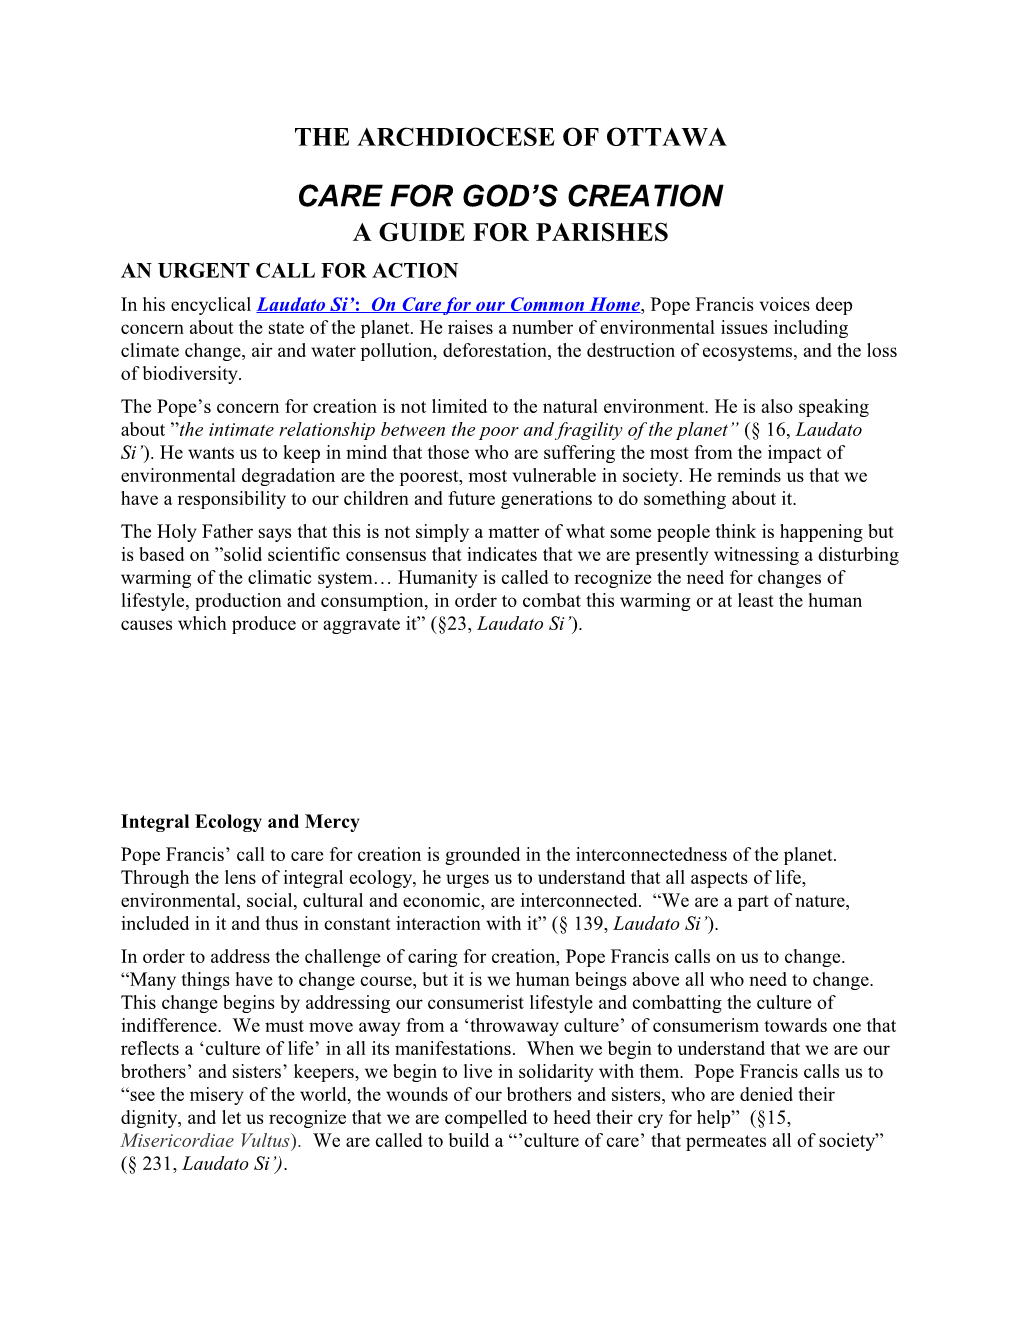 Care for God Screation